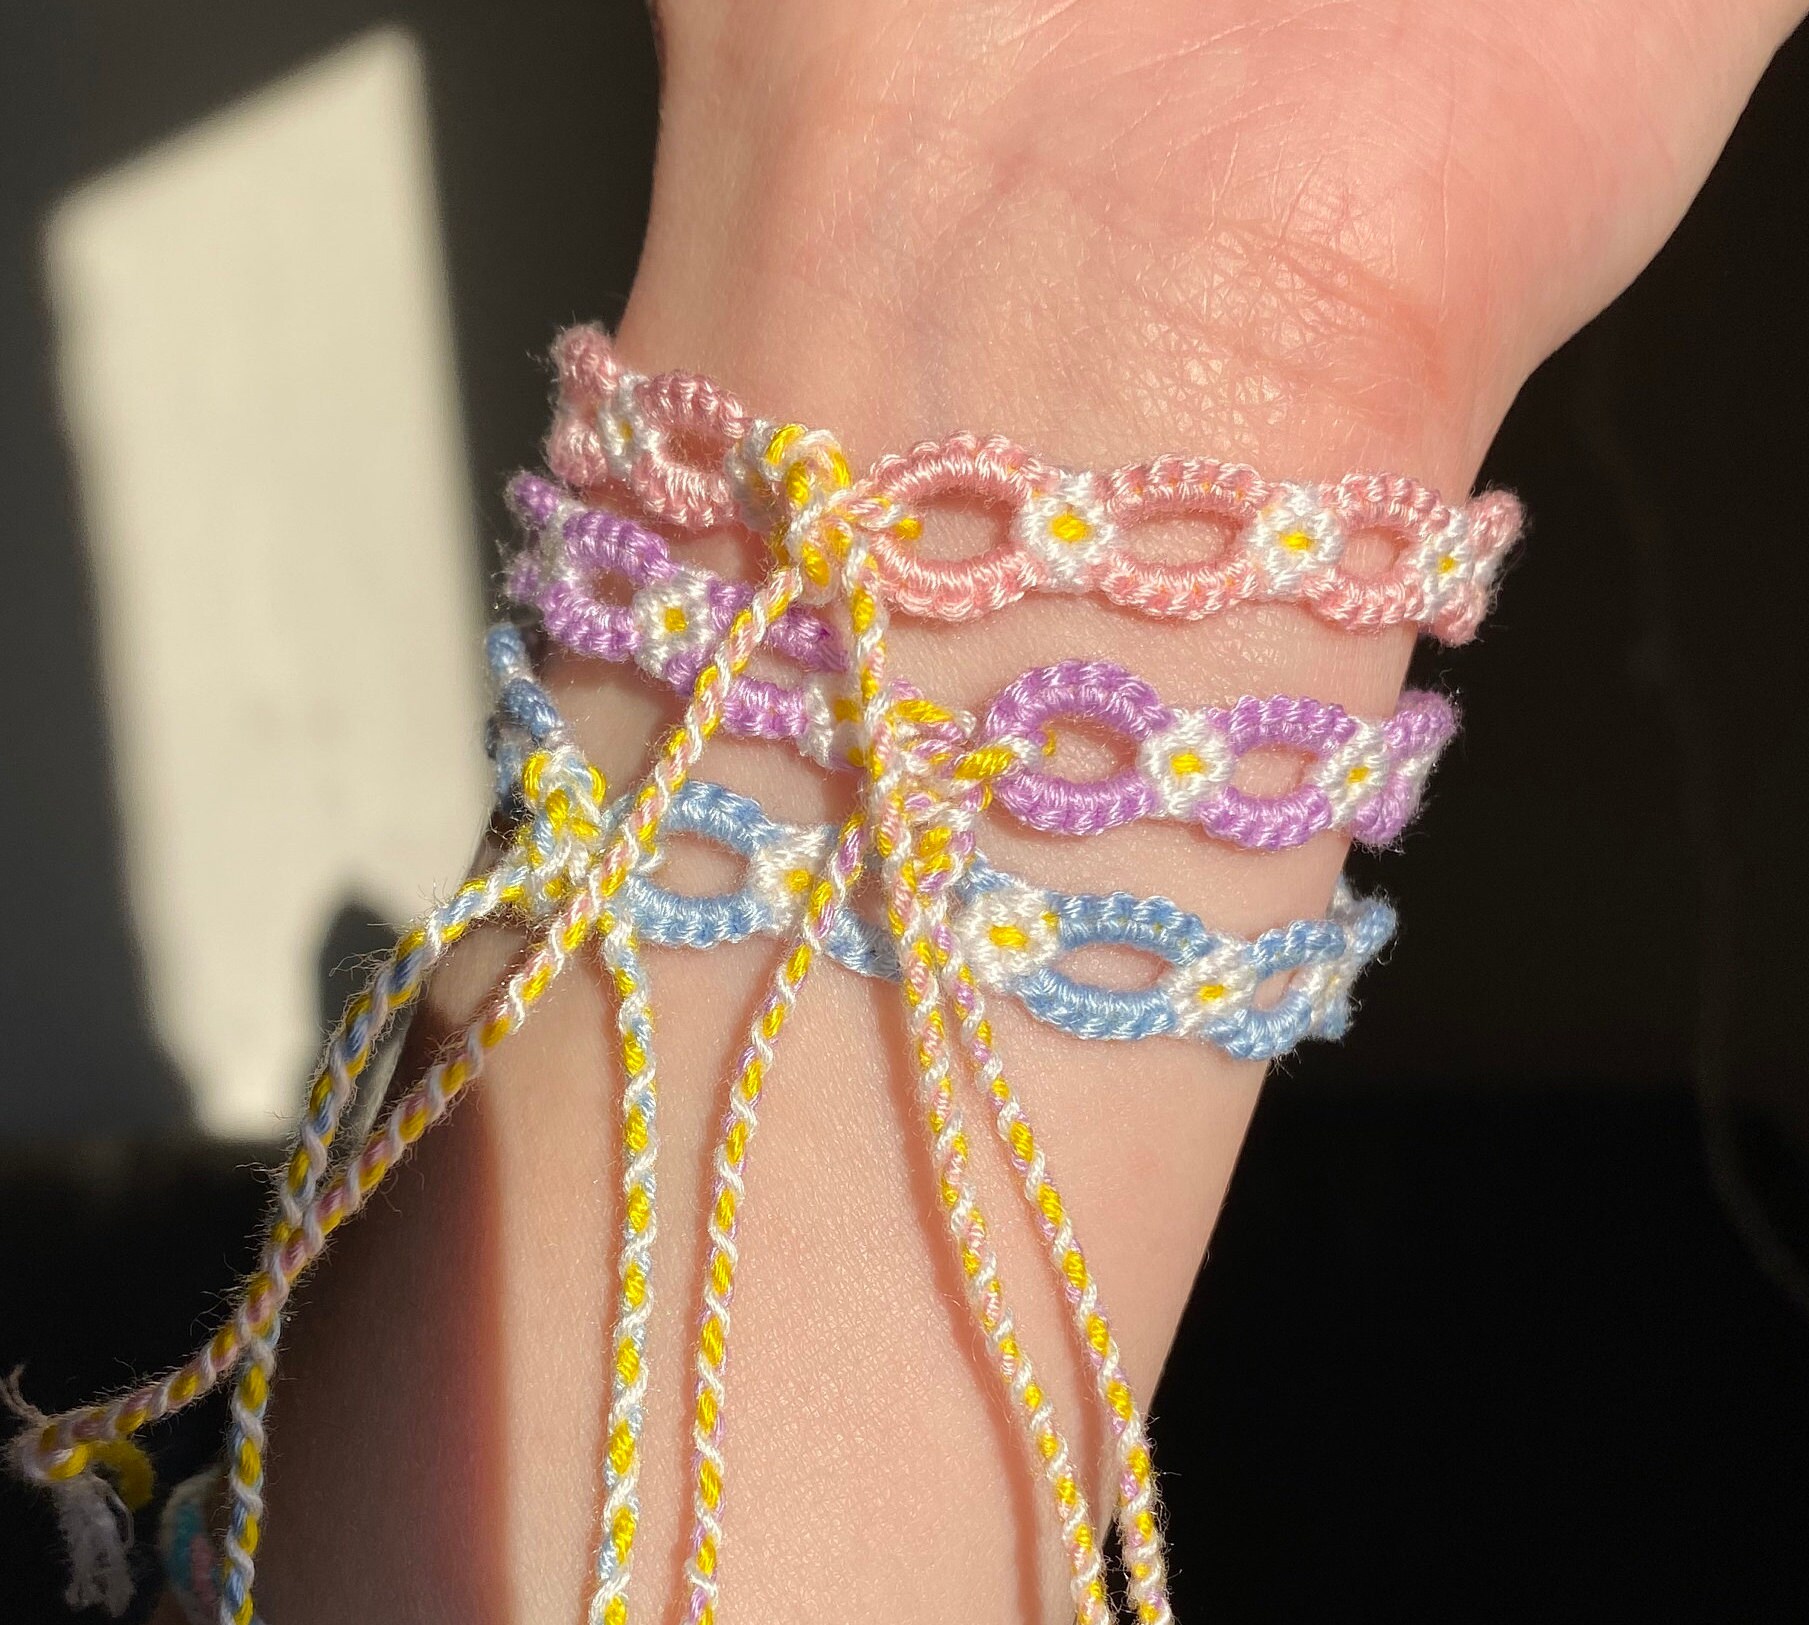 Single Braided Friendship Bracelets Bulk Trendy Colorful 